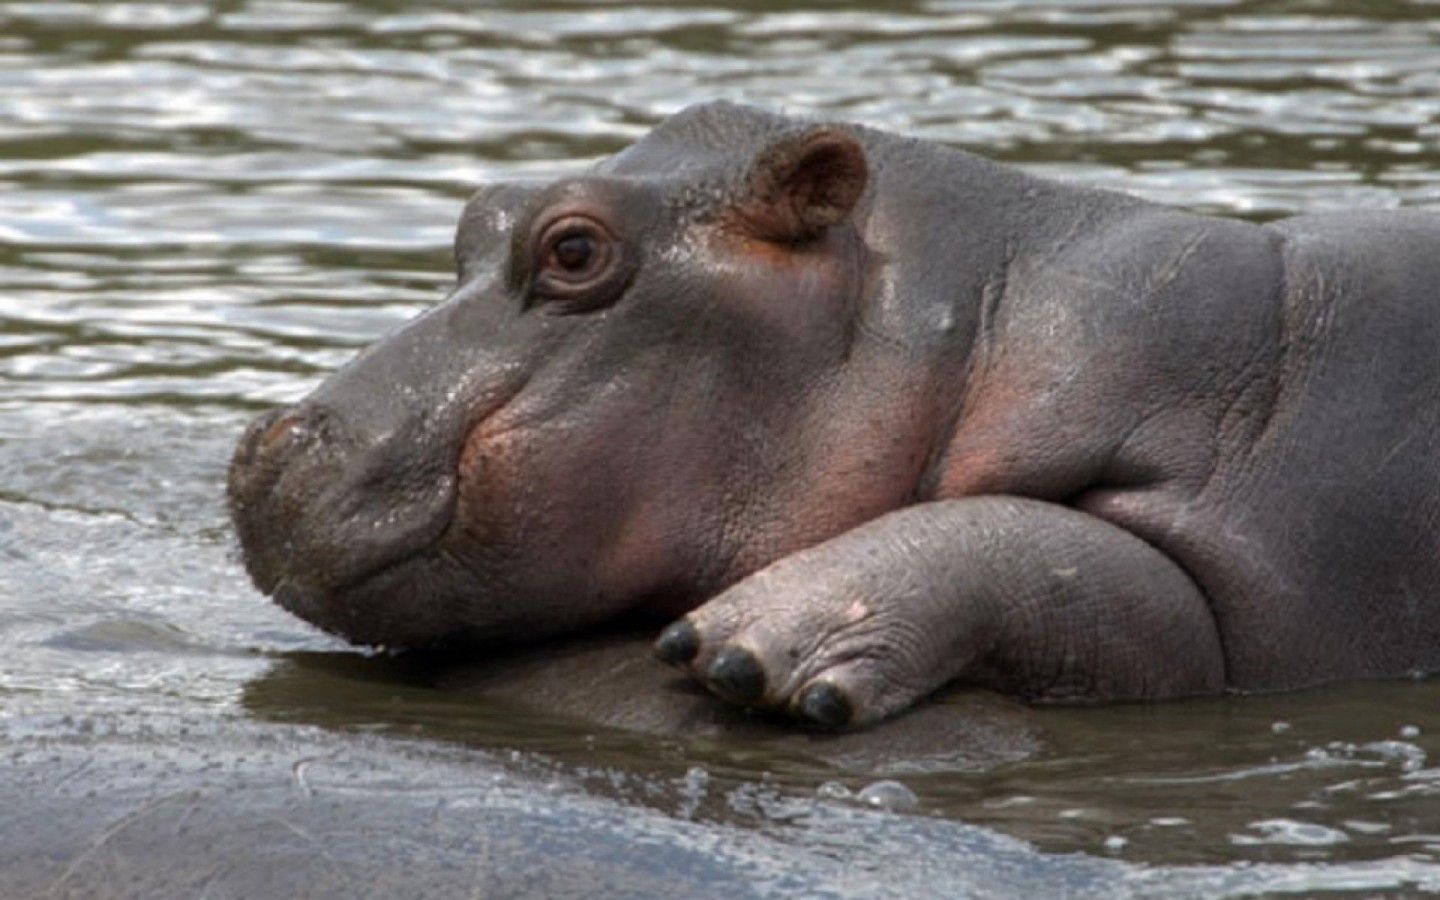 Lovely Hippopotamus Mobile Wallpaper Images Free Download on Lovepik |  400661408